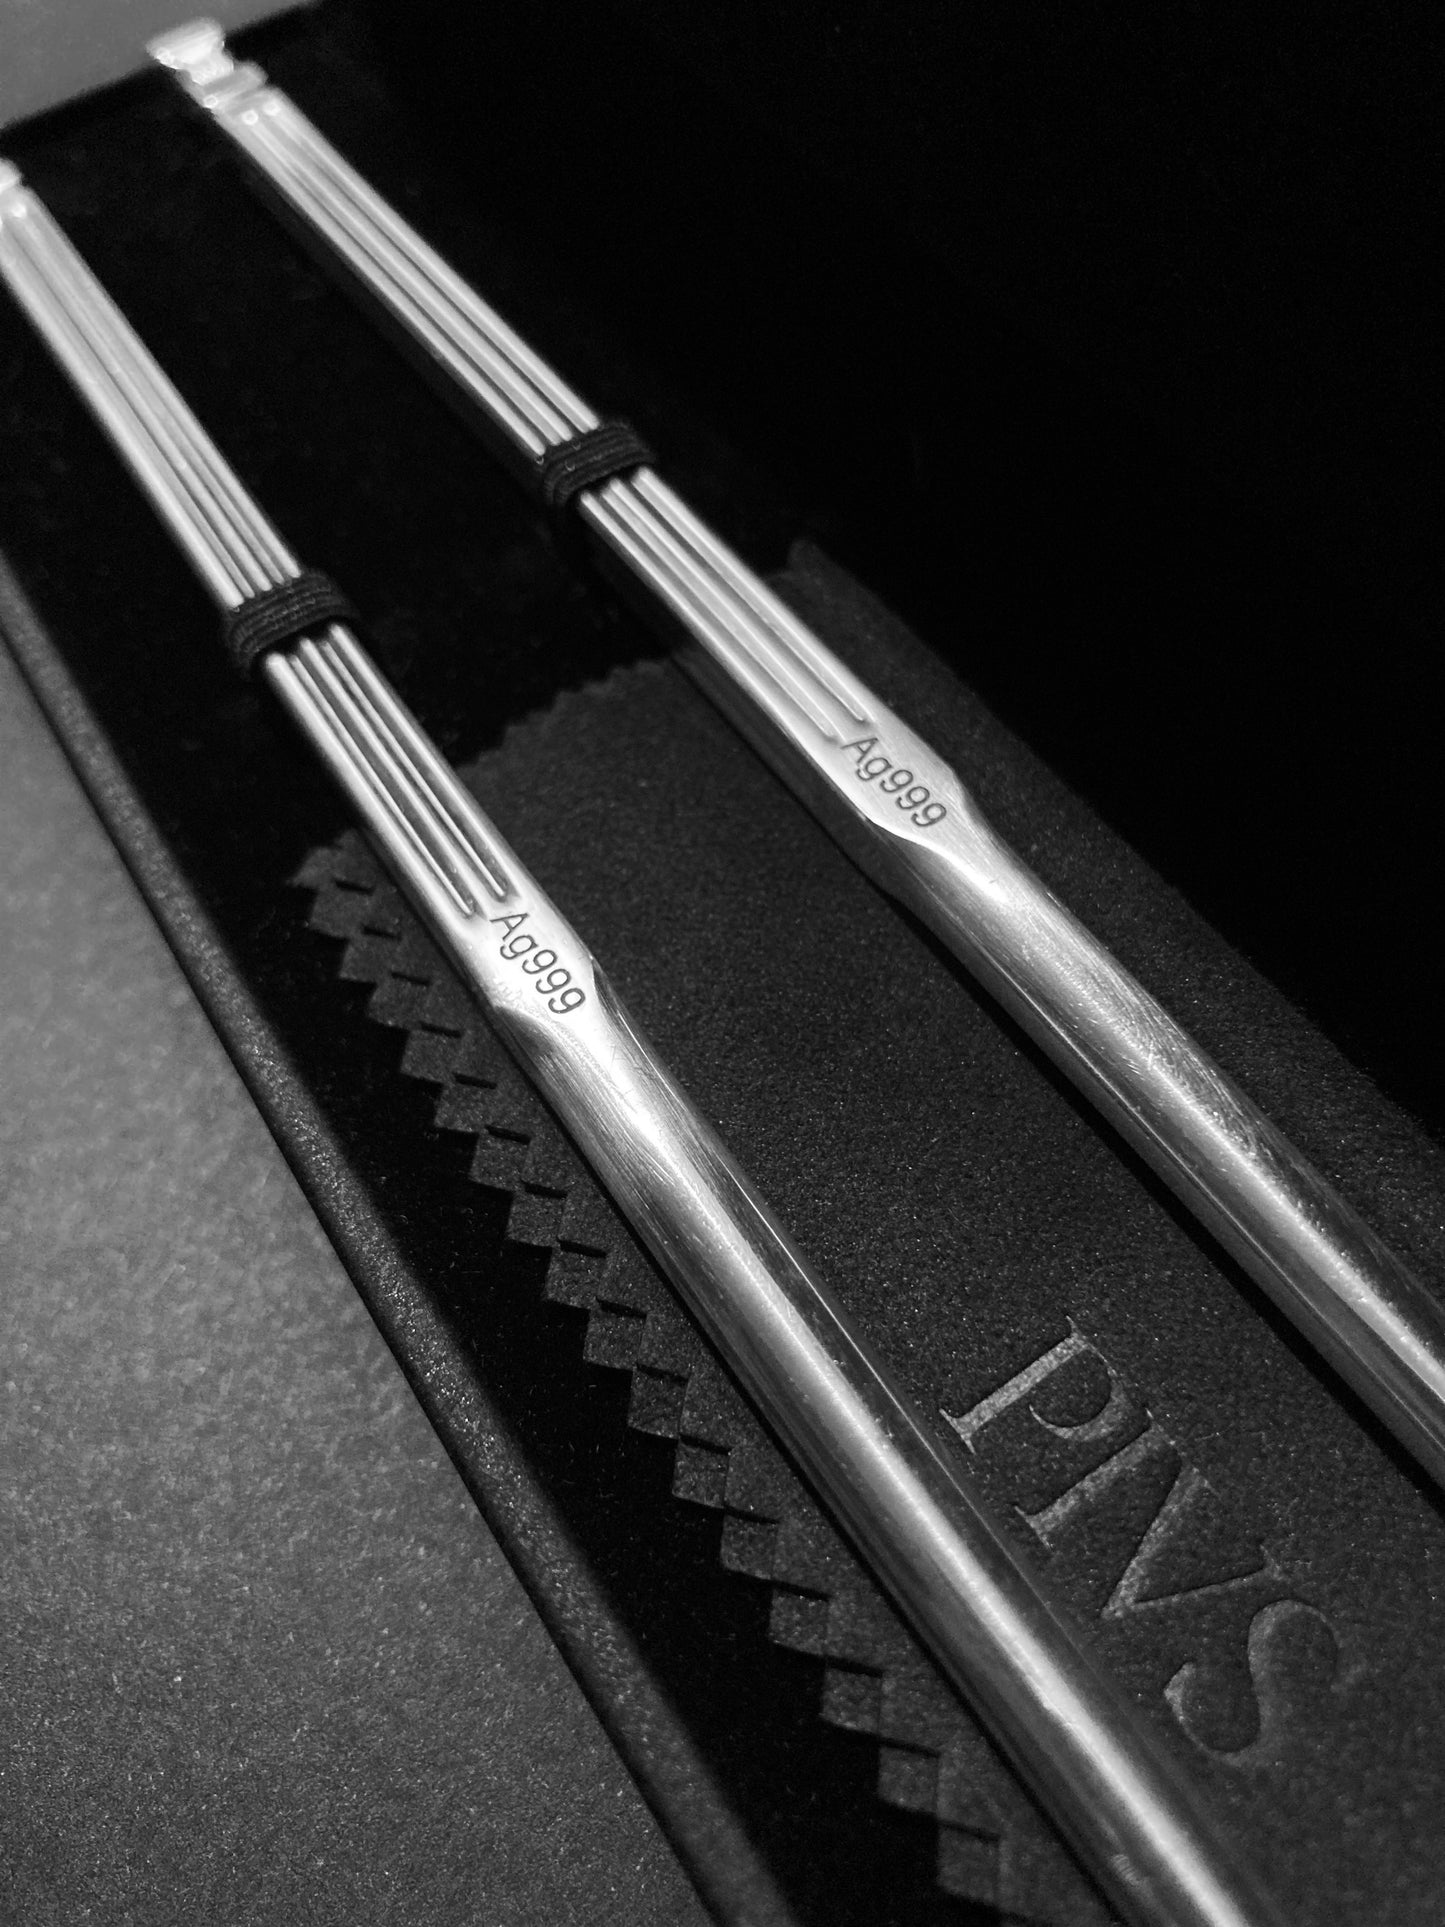 Couples Fidelitas Series Pure Silver Chopsticks 999